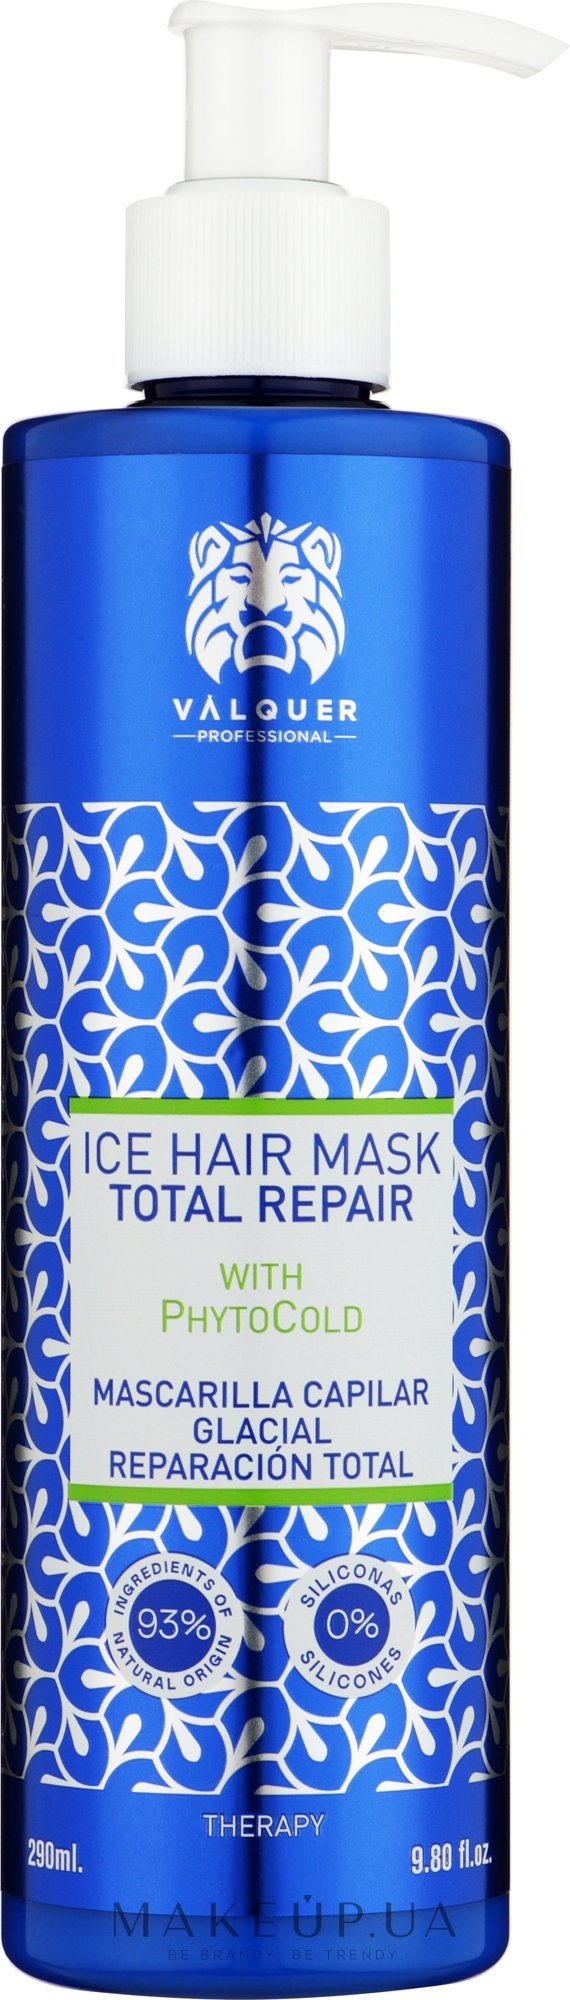 Відновлювальна маска для волосся - Valquer Ice Hair Mask Total Repair — фото 290ml